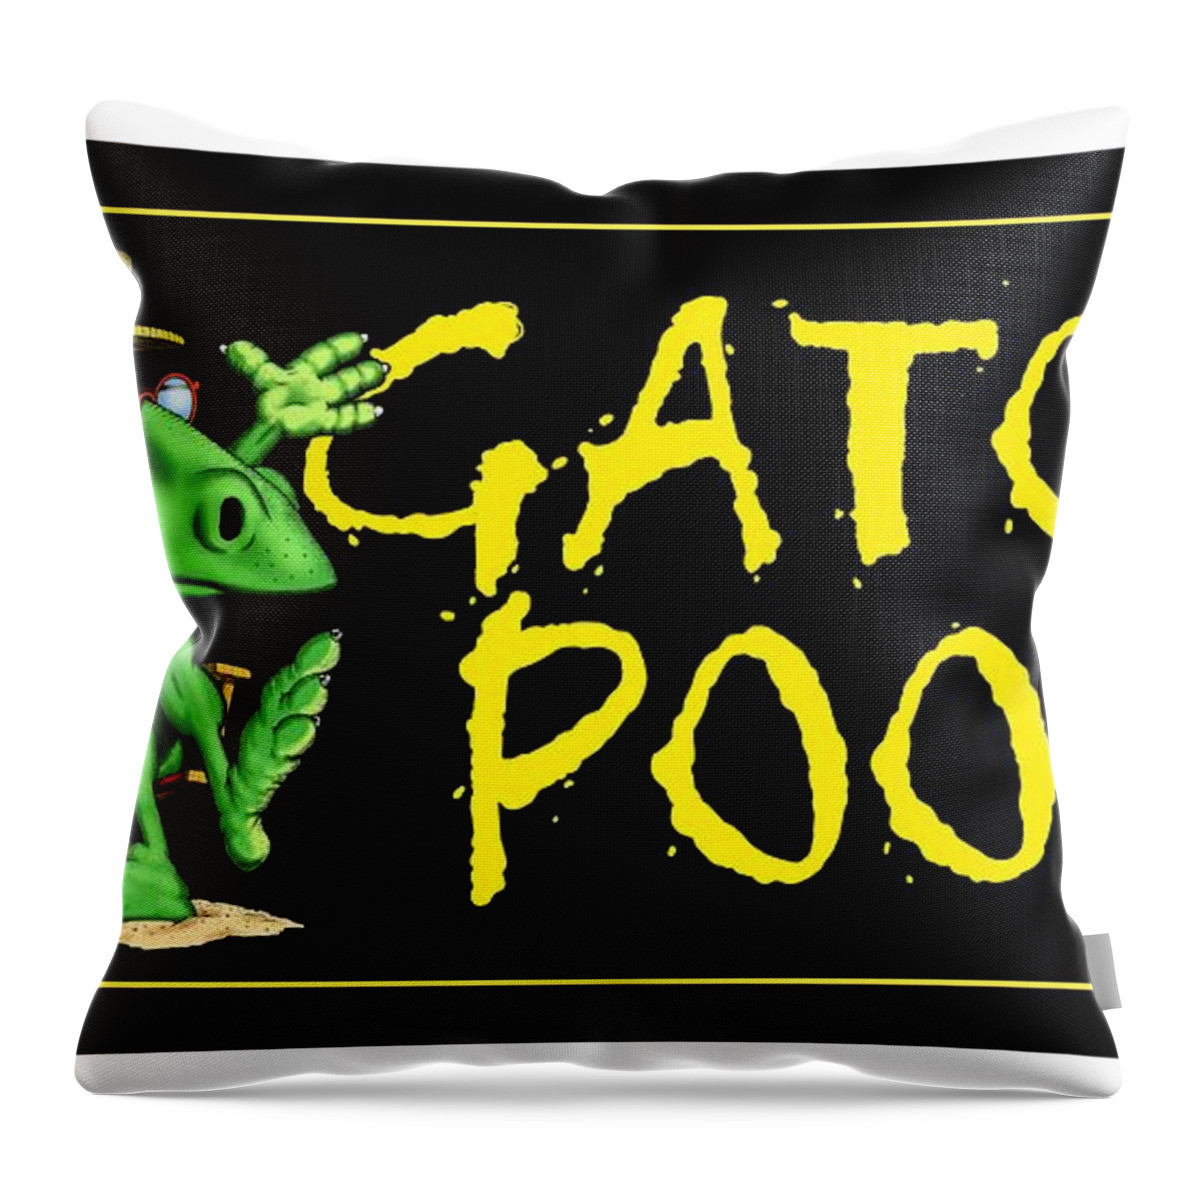 Adverting Artwork Throw Pillow featuring the digital art Gator Poop by Scott Ross